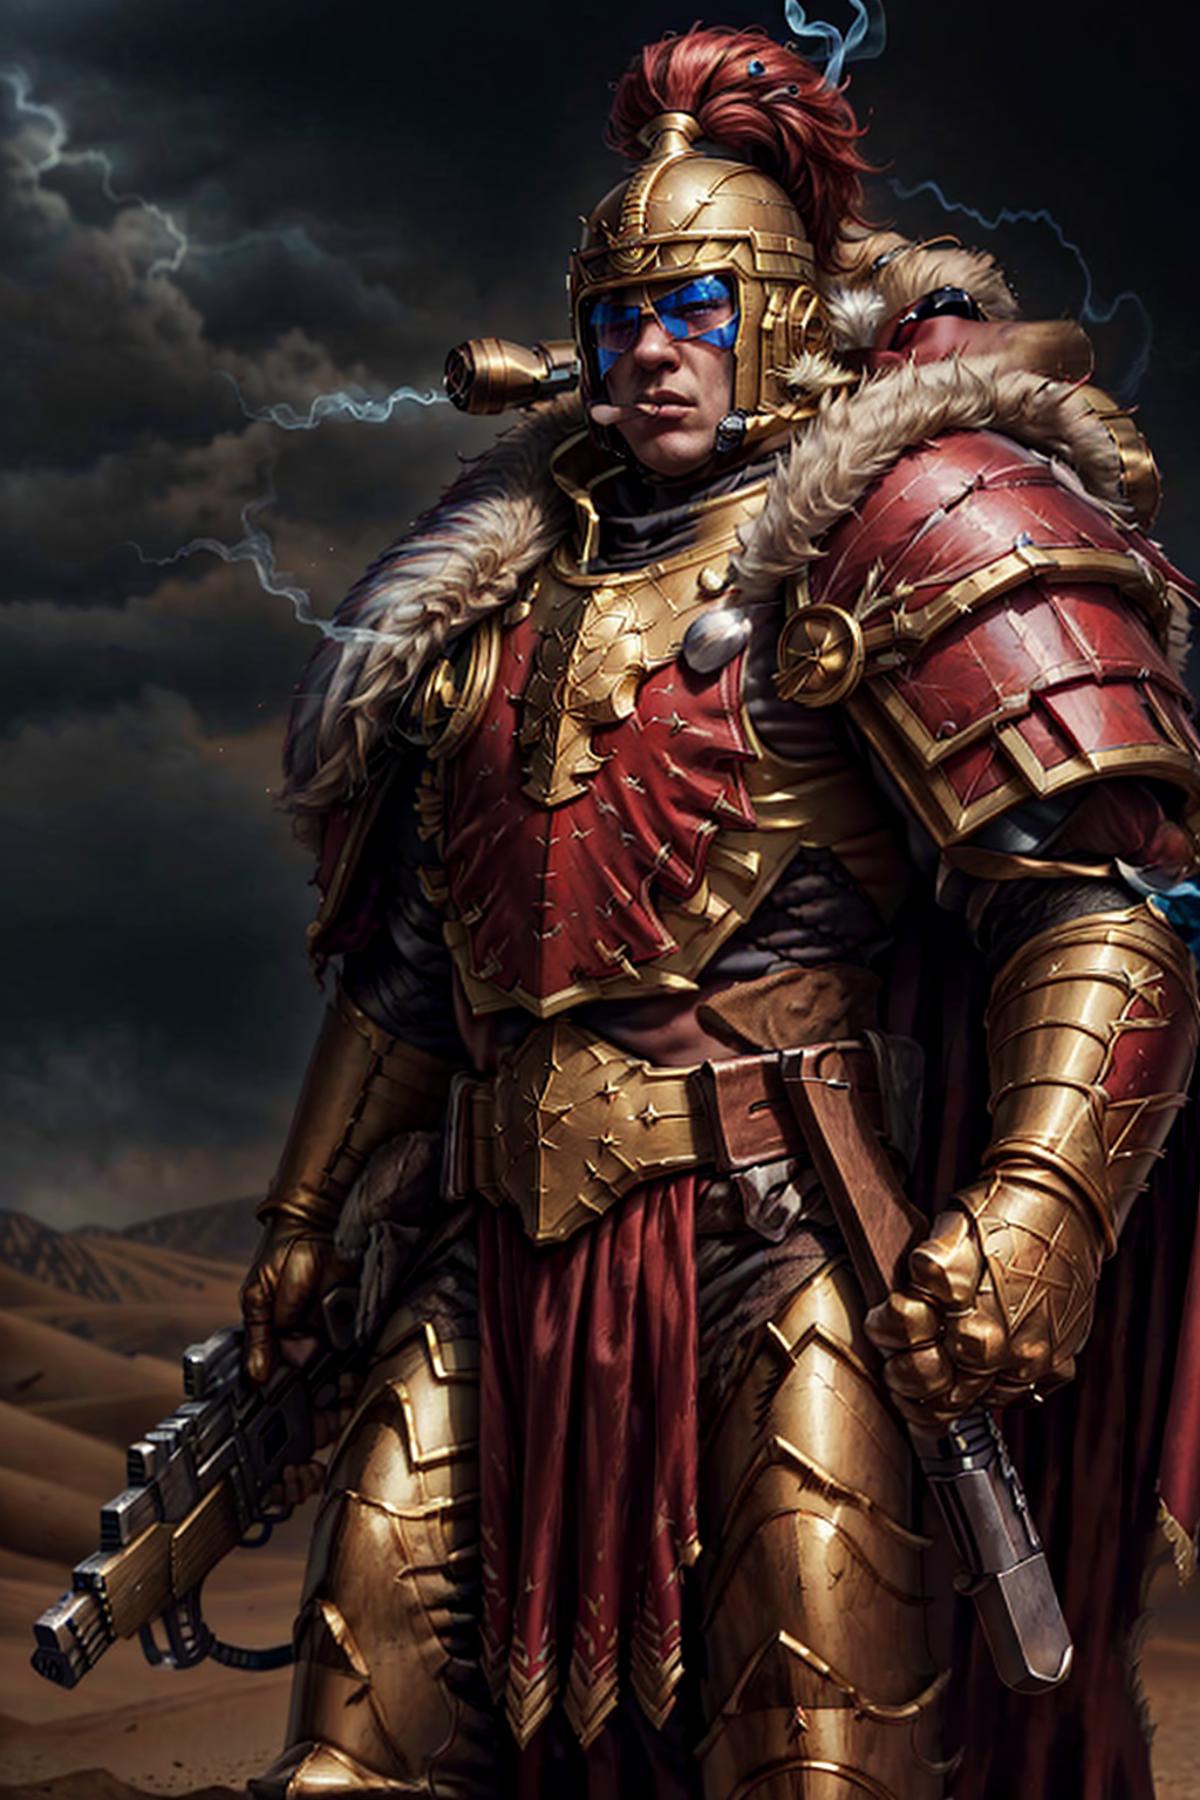 Thunder Warriors, Legiones Cataegis image by ccaraxess